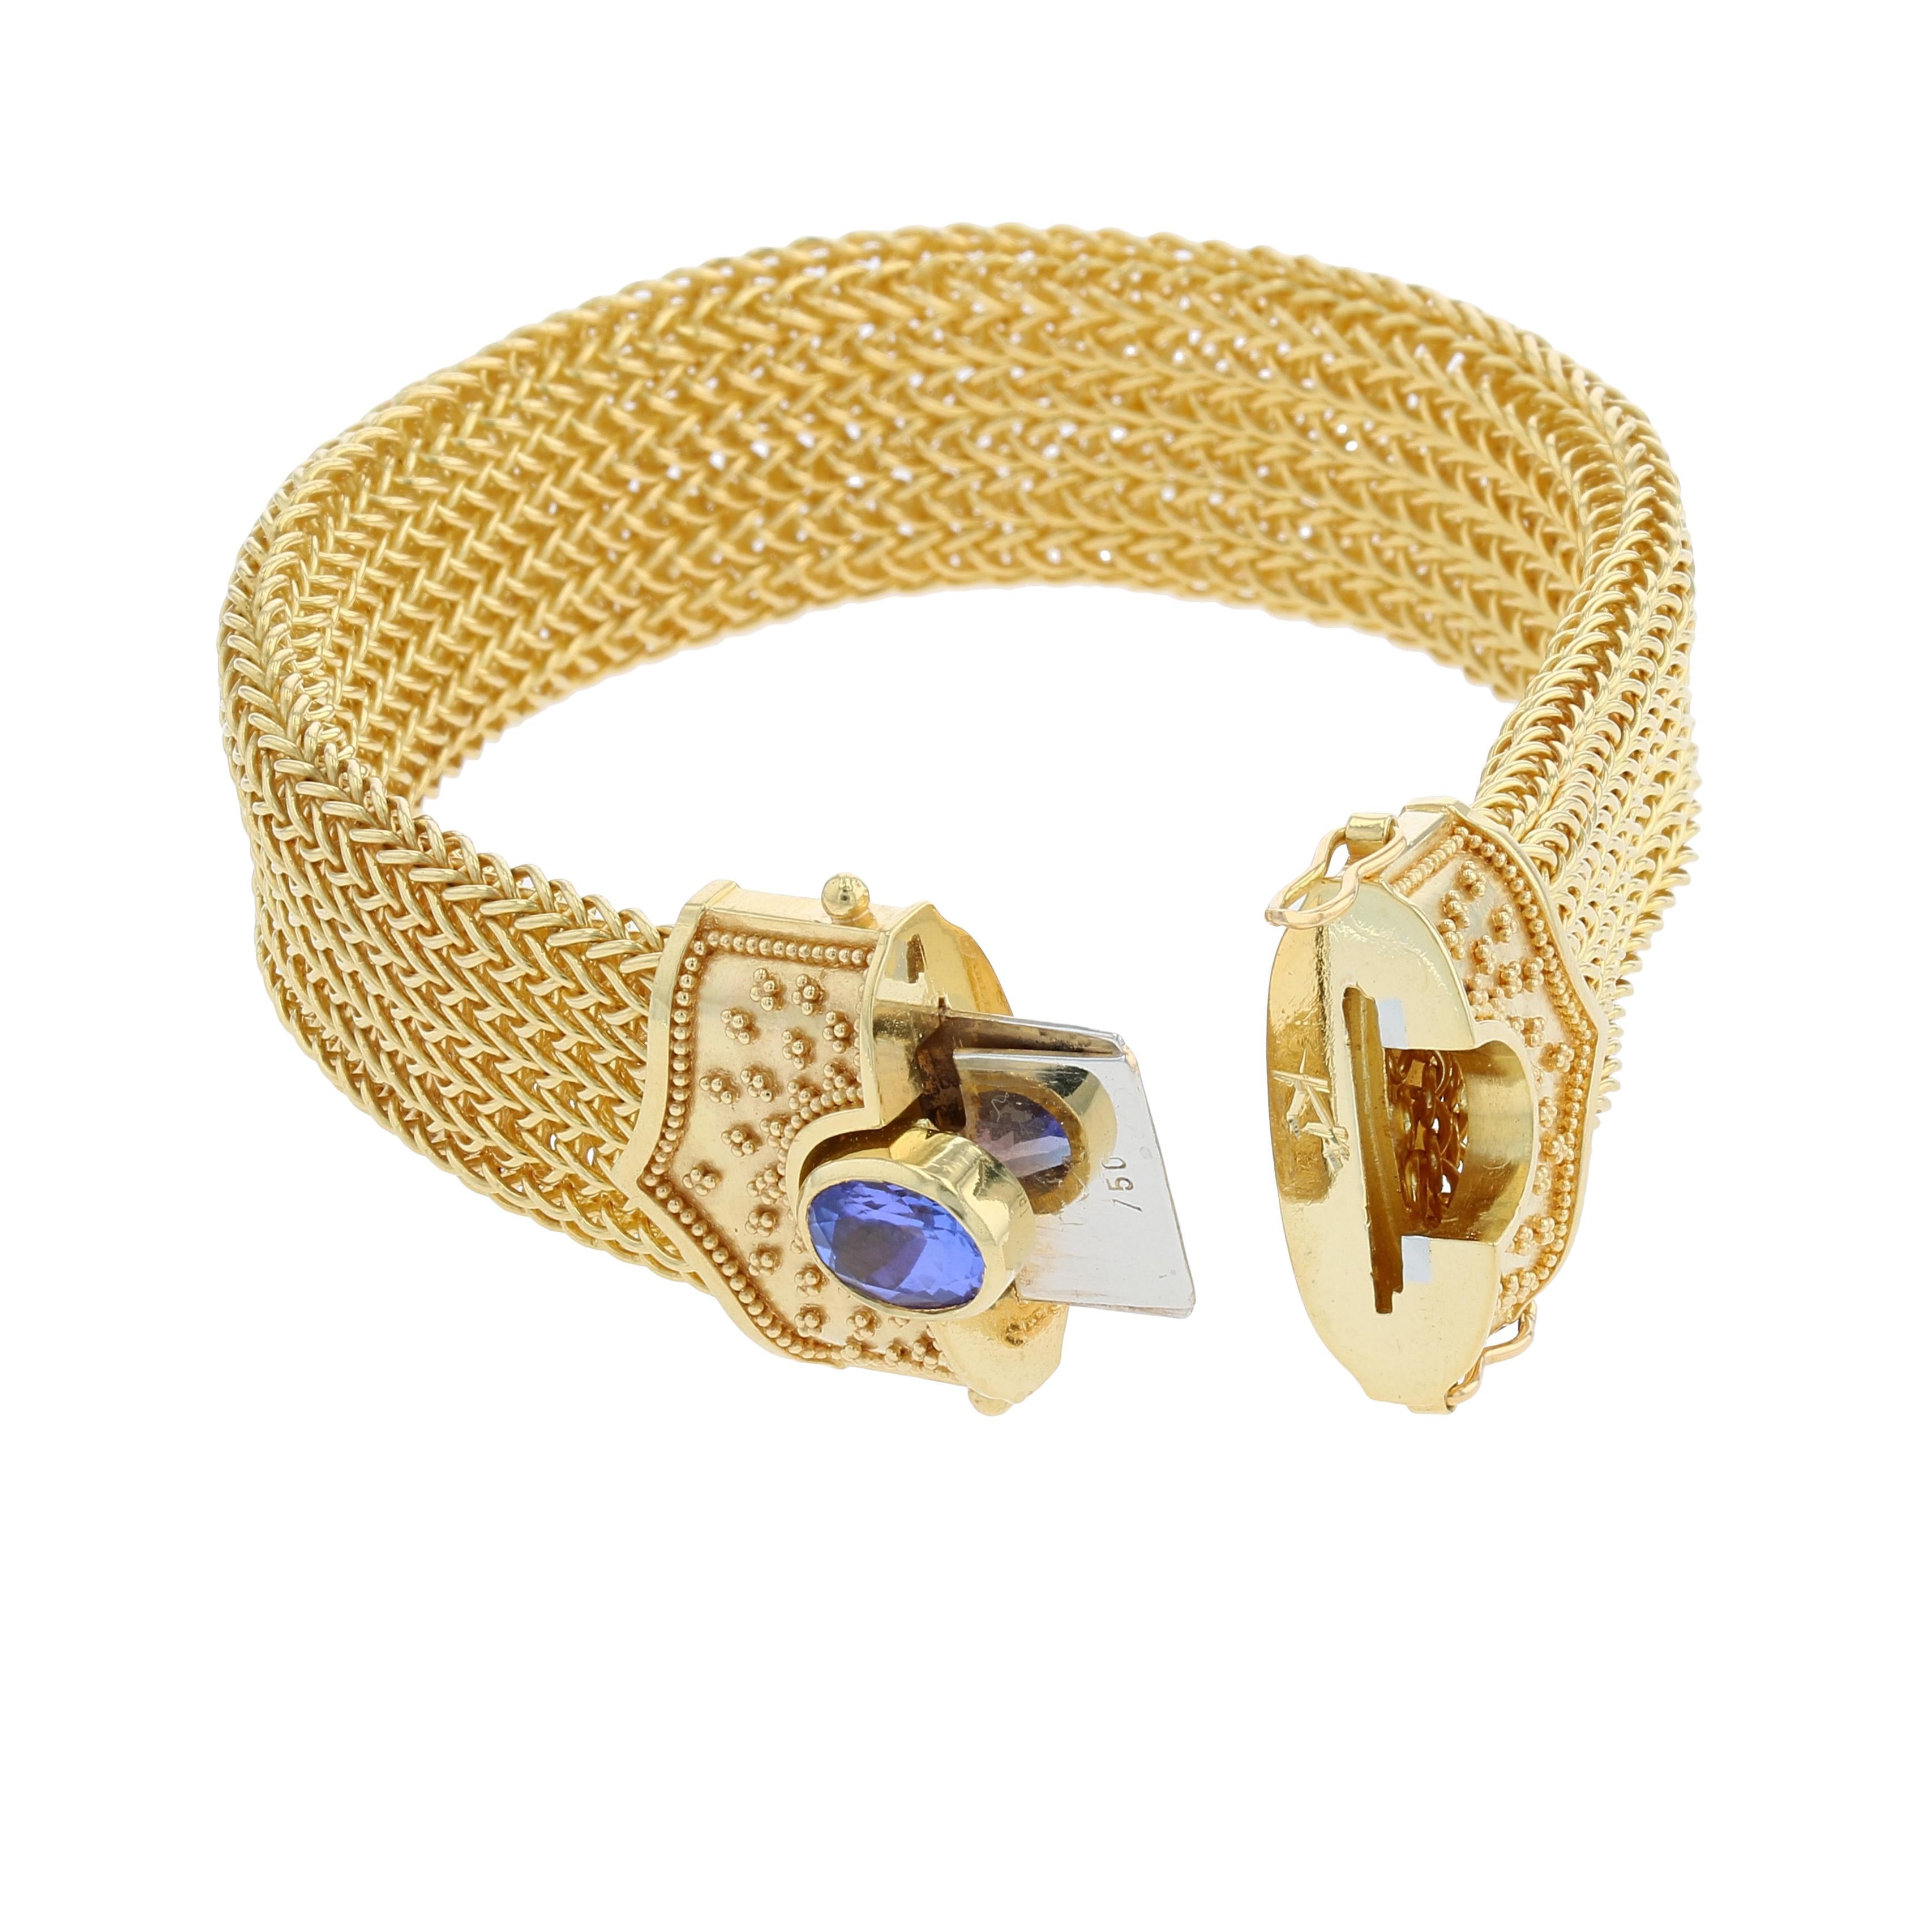 Oval Cut Kent Raible 18 Karat Gold Wide Woven Chain Bracelet, Tanzanite with Granulation For Sale